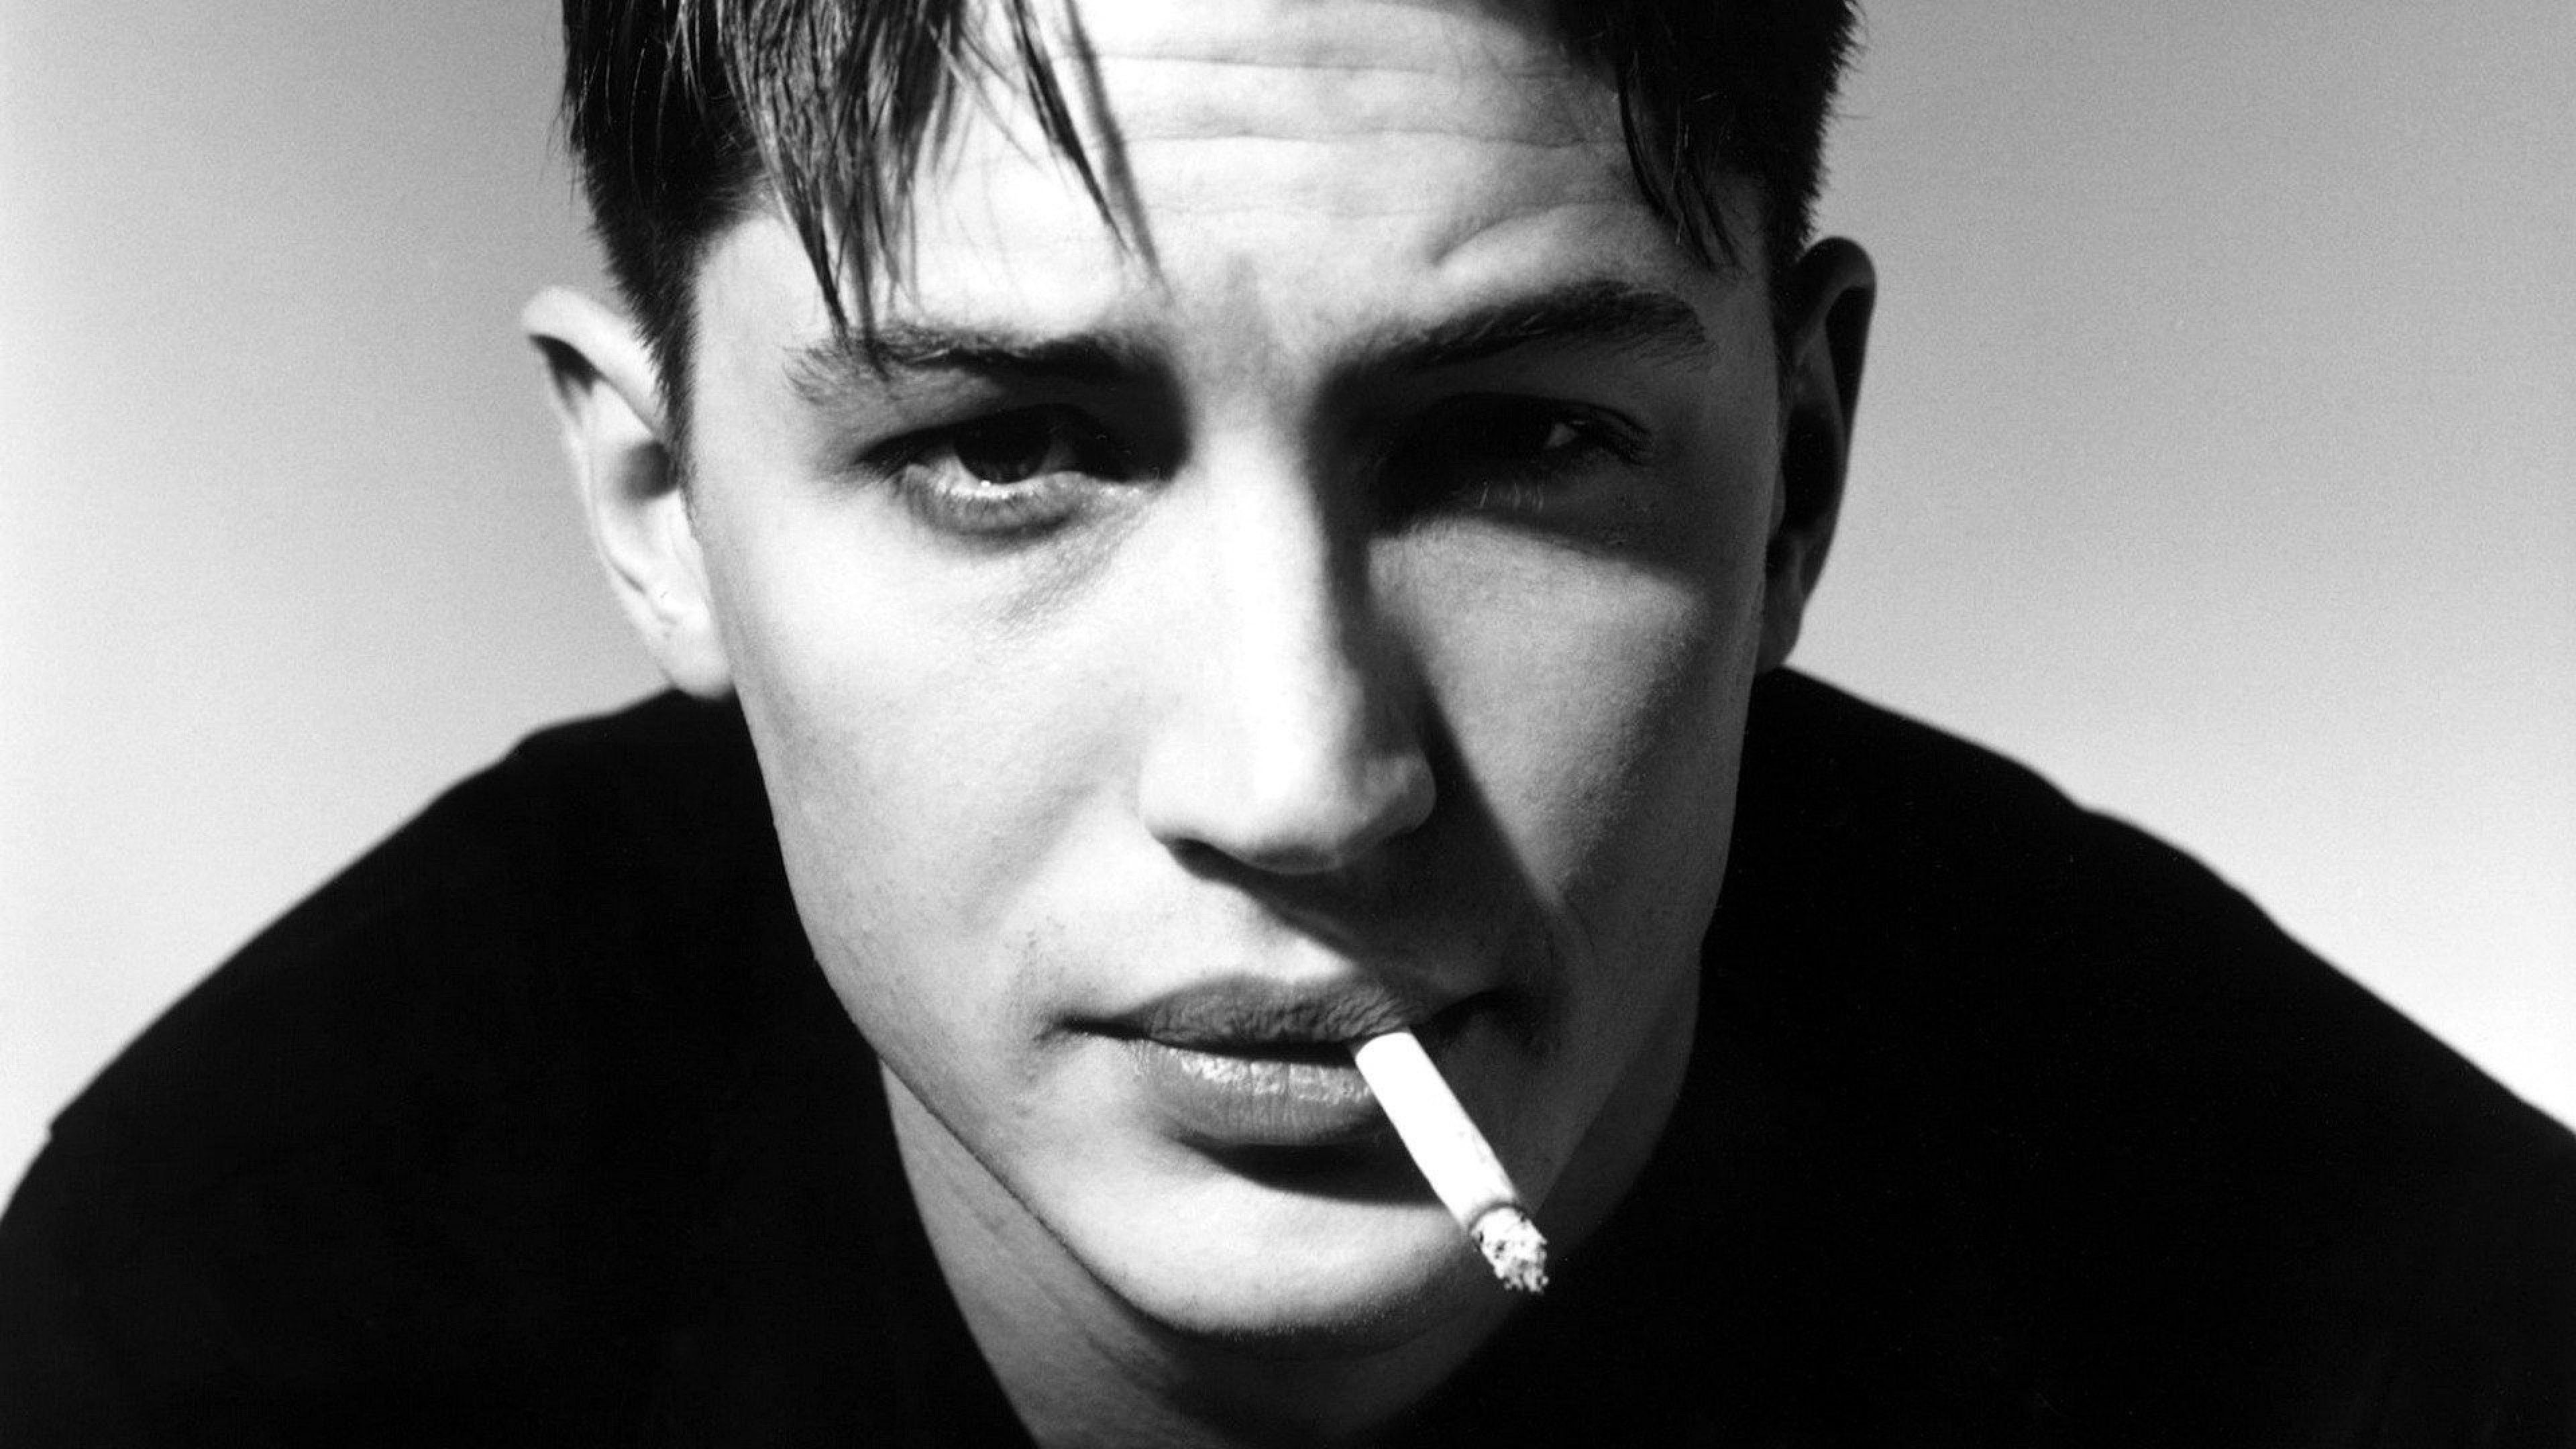 Tom Hardy Monochrome Men Cigarettes Portrait Actor Face Smoking Wallpaper:3840x2160